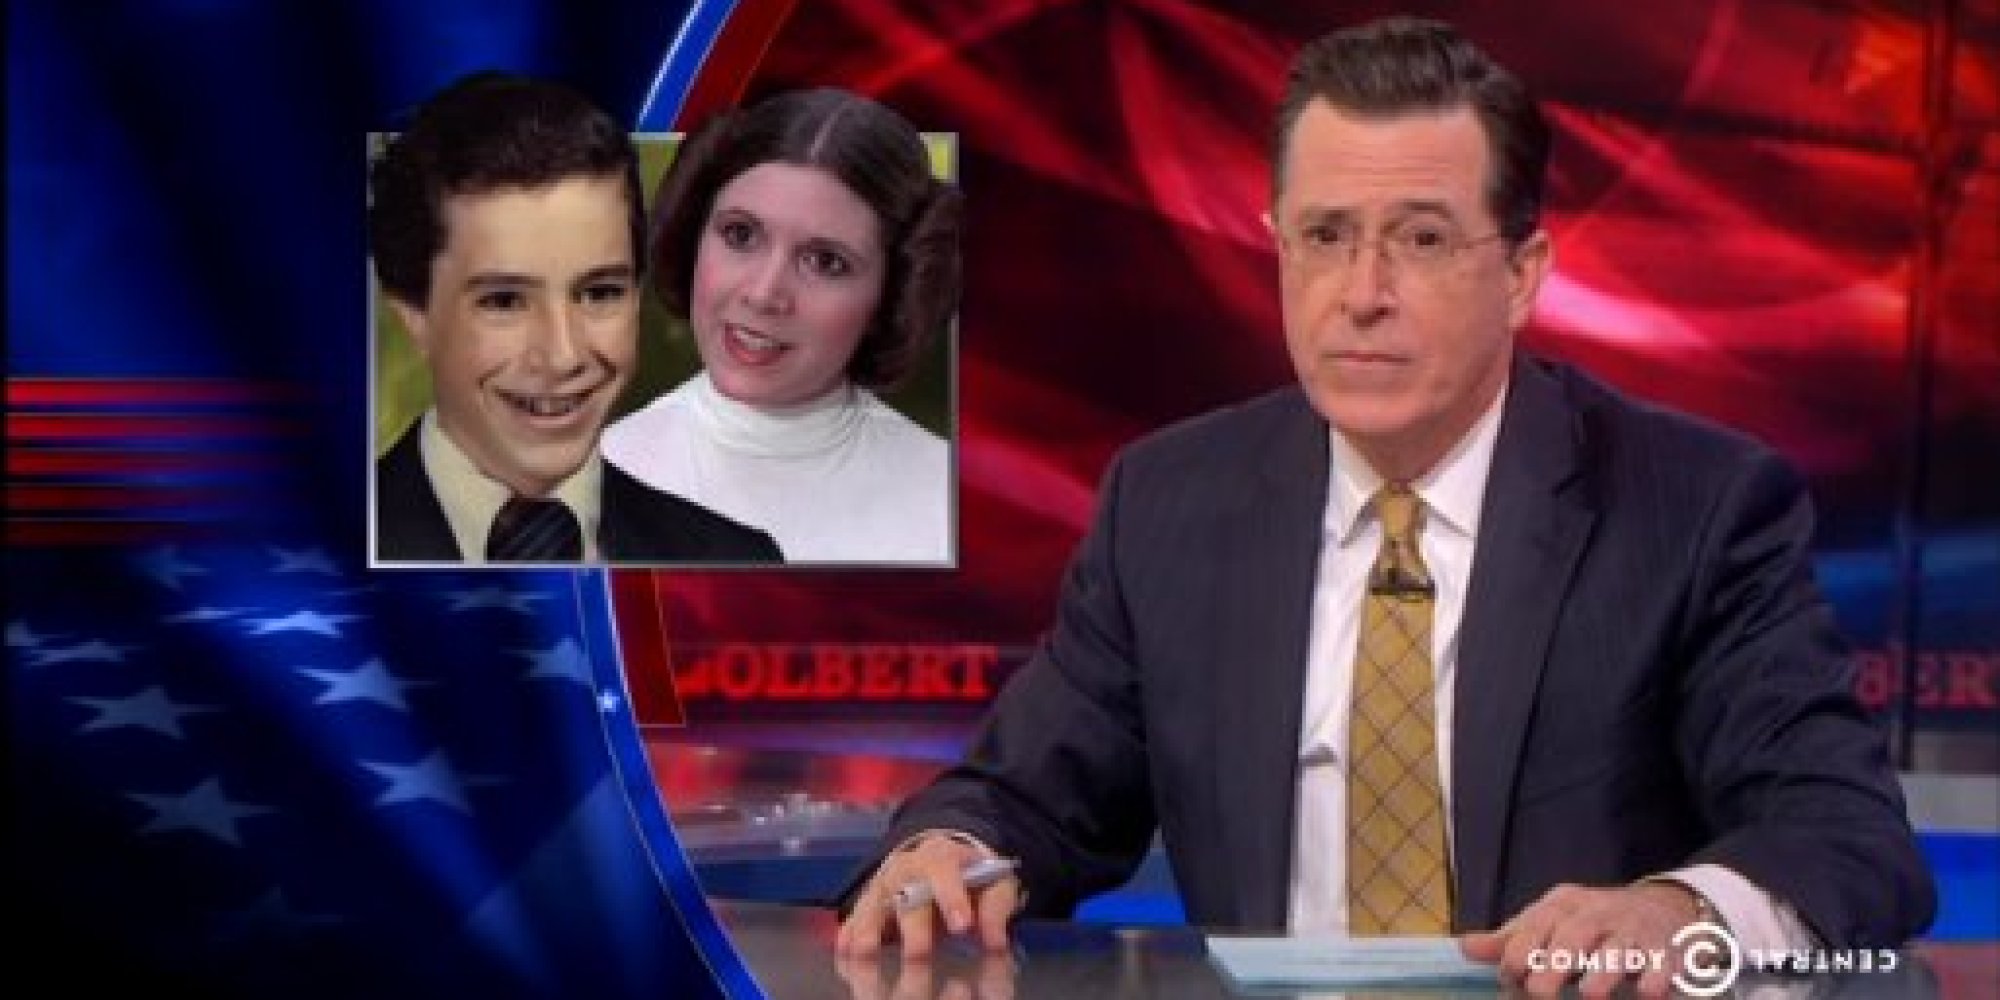 The Colbert Report - Season 11, Episode 18: 2014/11/04